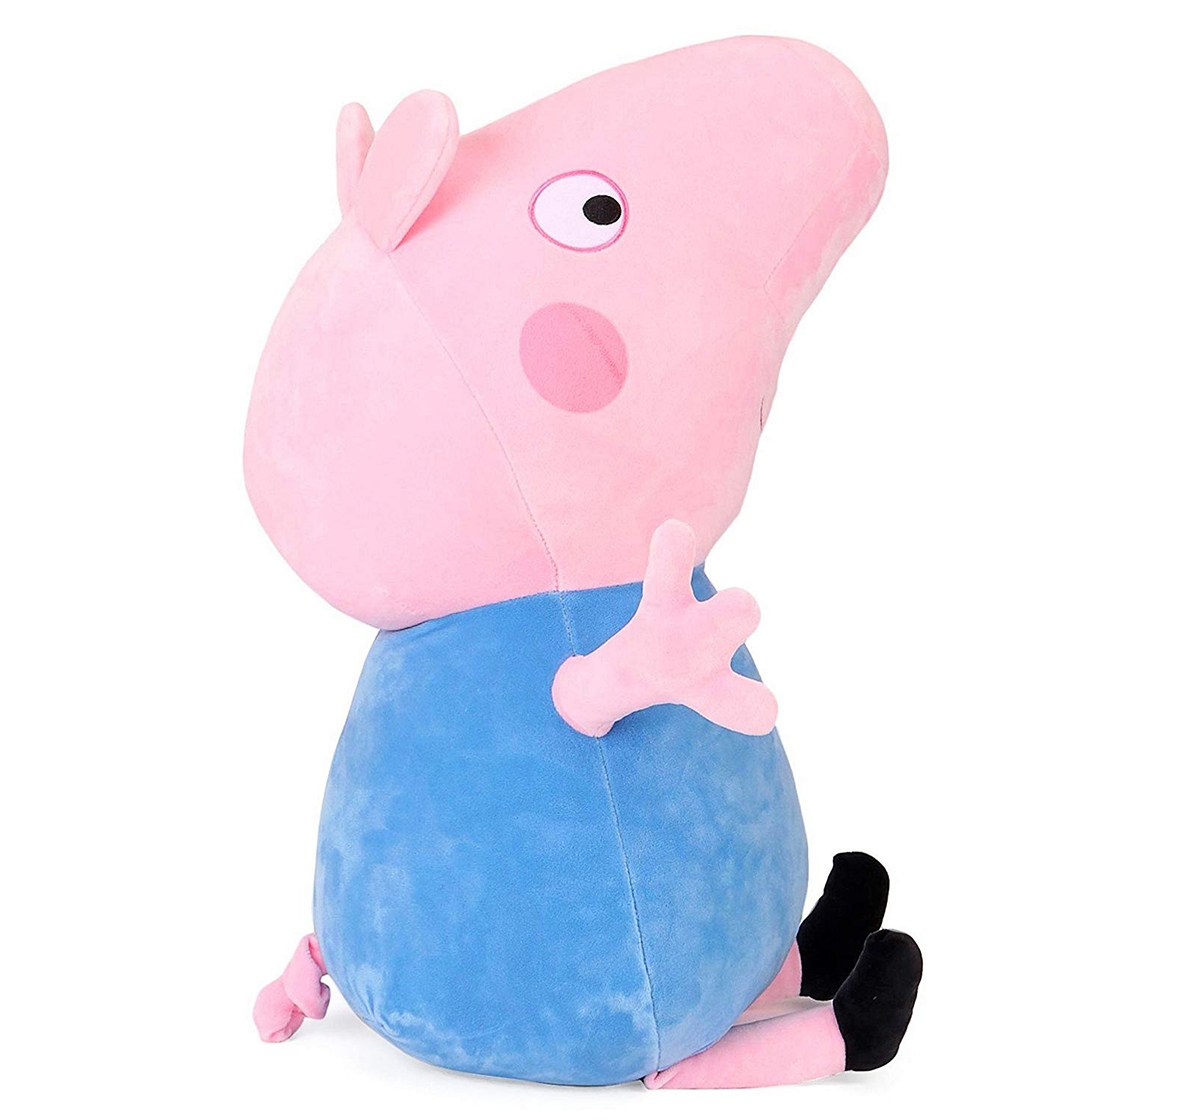 Peppa Pig | Peppa George Pig  Multi Color 46 Cm Soft Toy for Kids age 0M+ (Blue) 3